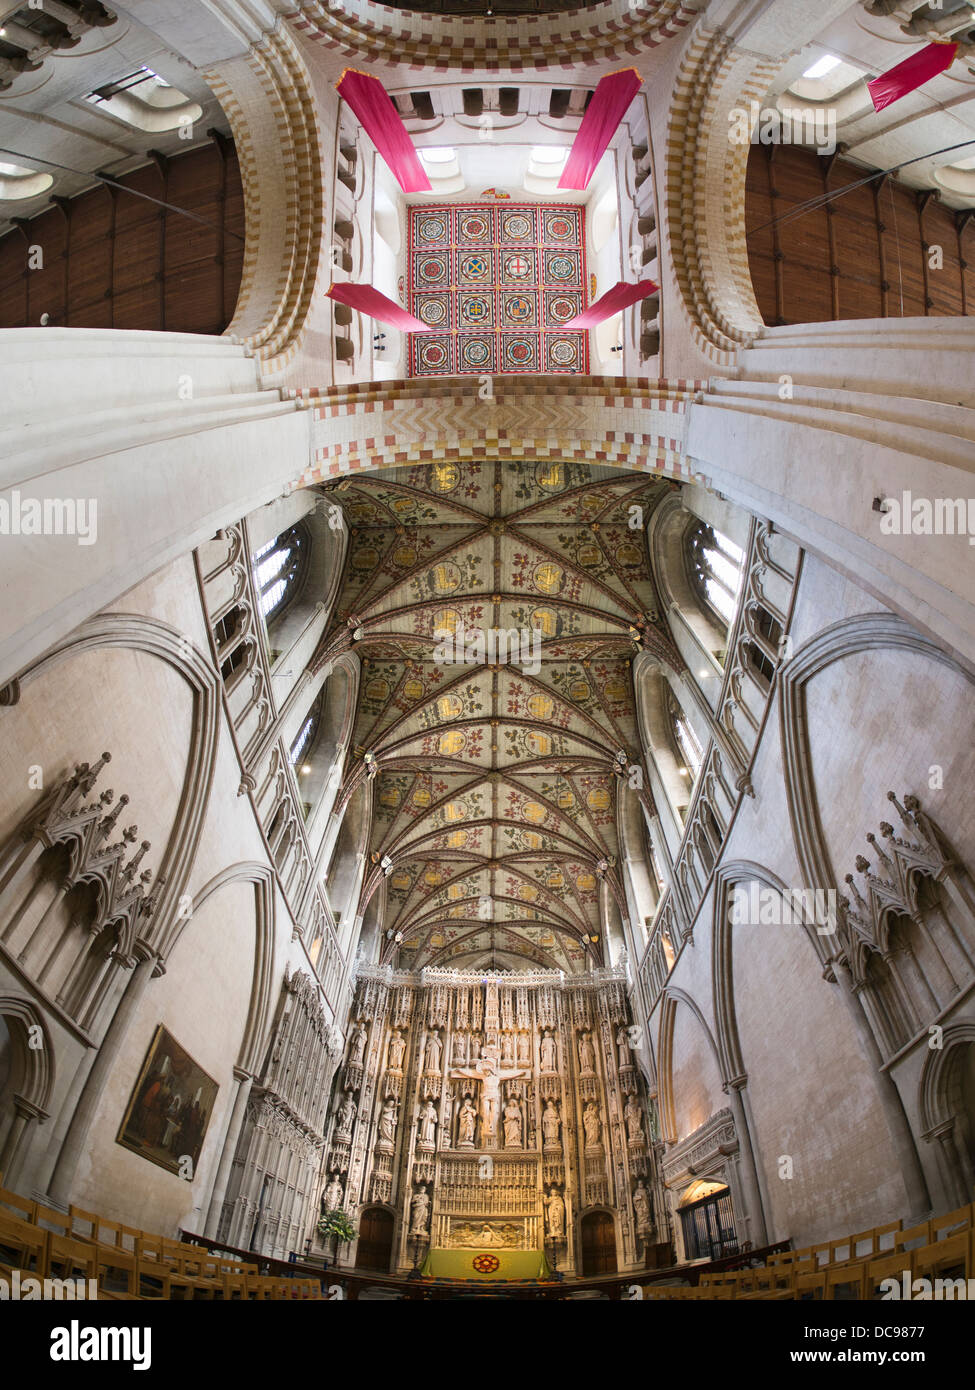 St Albans Cathedral in Hertfordshire, England - Innenraum fisheye 3 Stockfoto